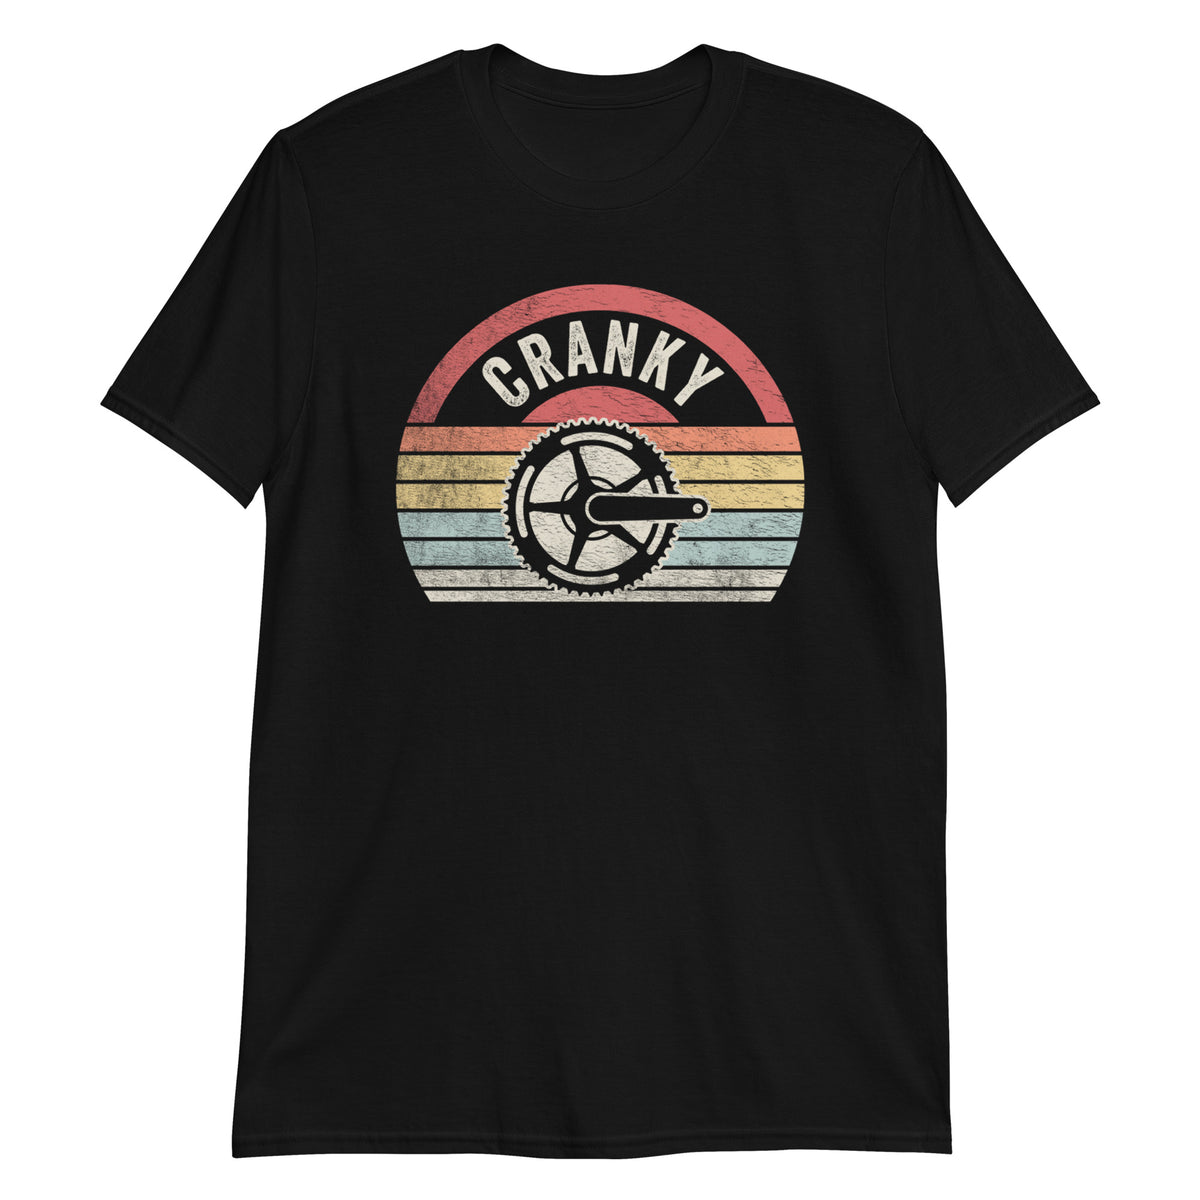 Cranky T-Shirt